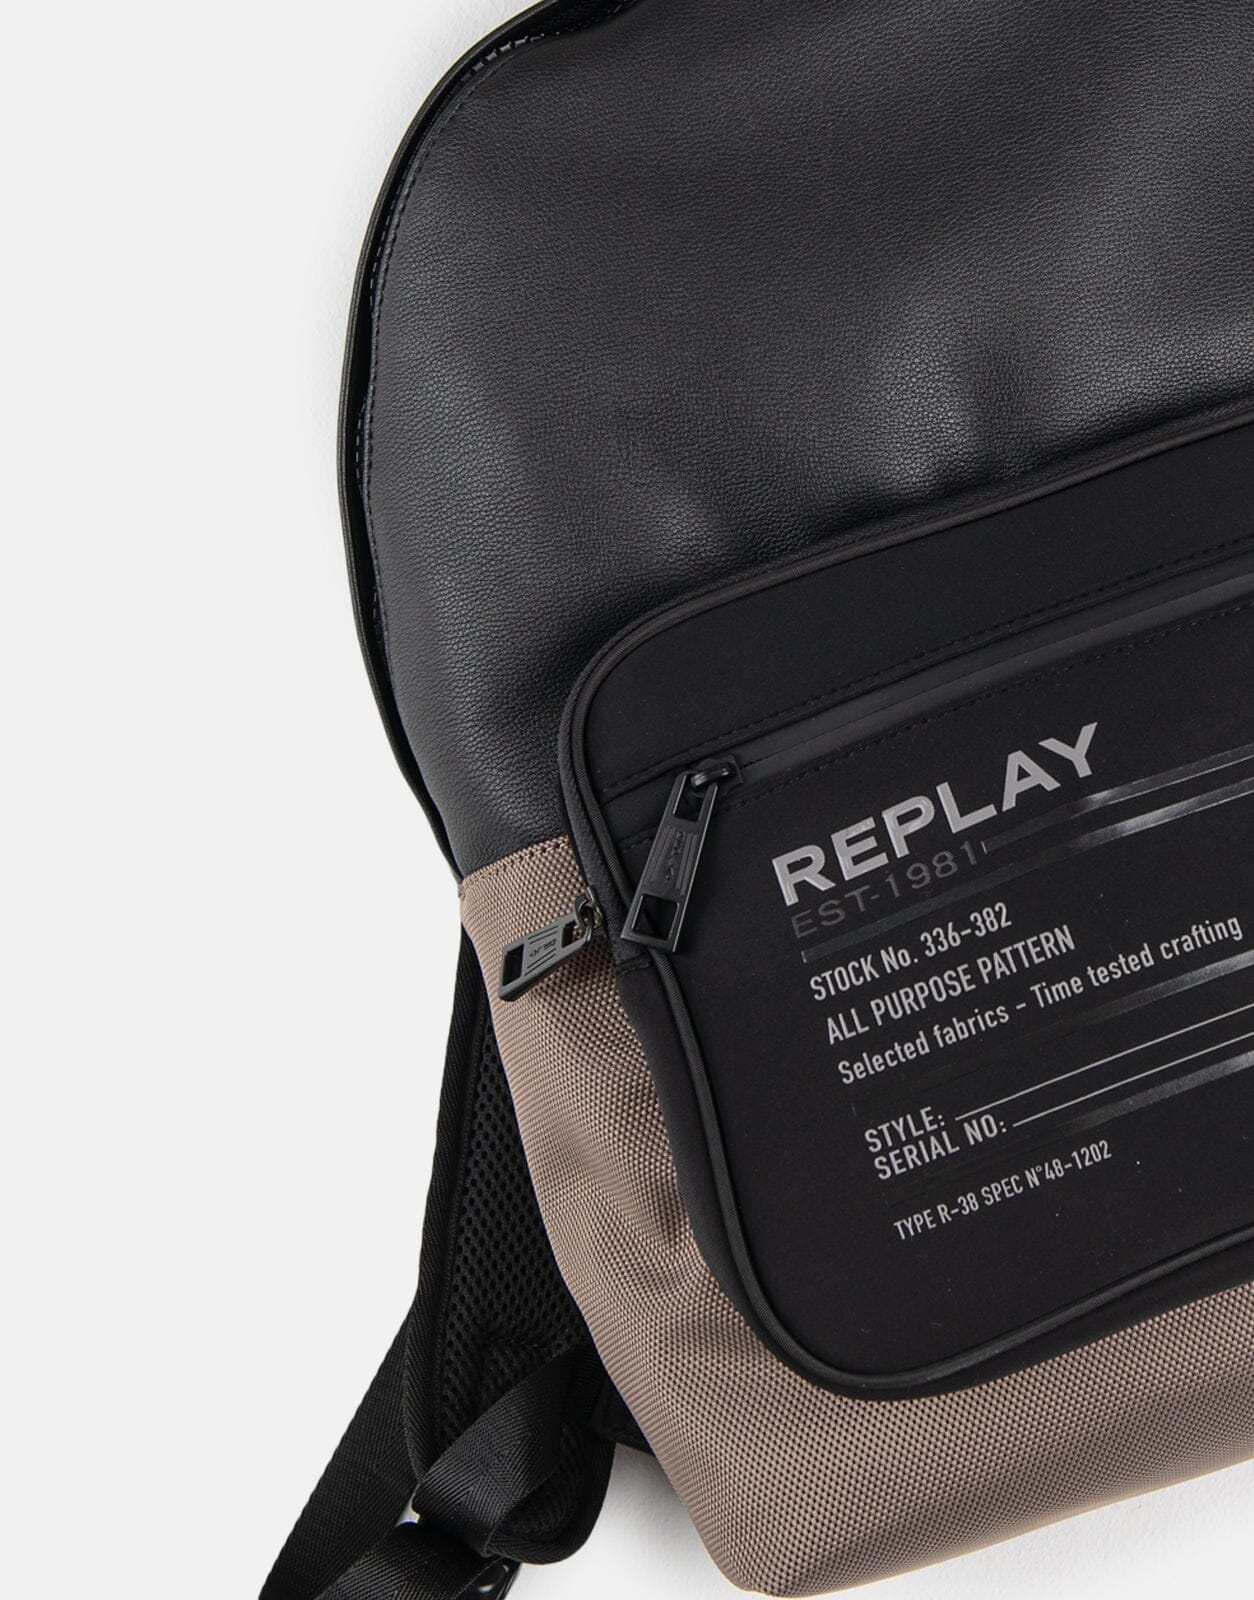 Replay Black Backpack Bag - Subwear